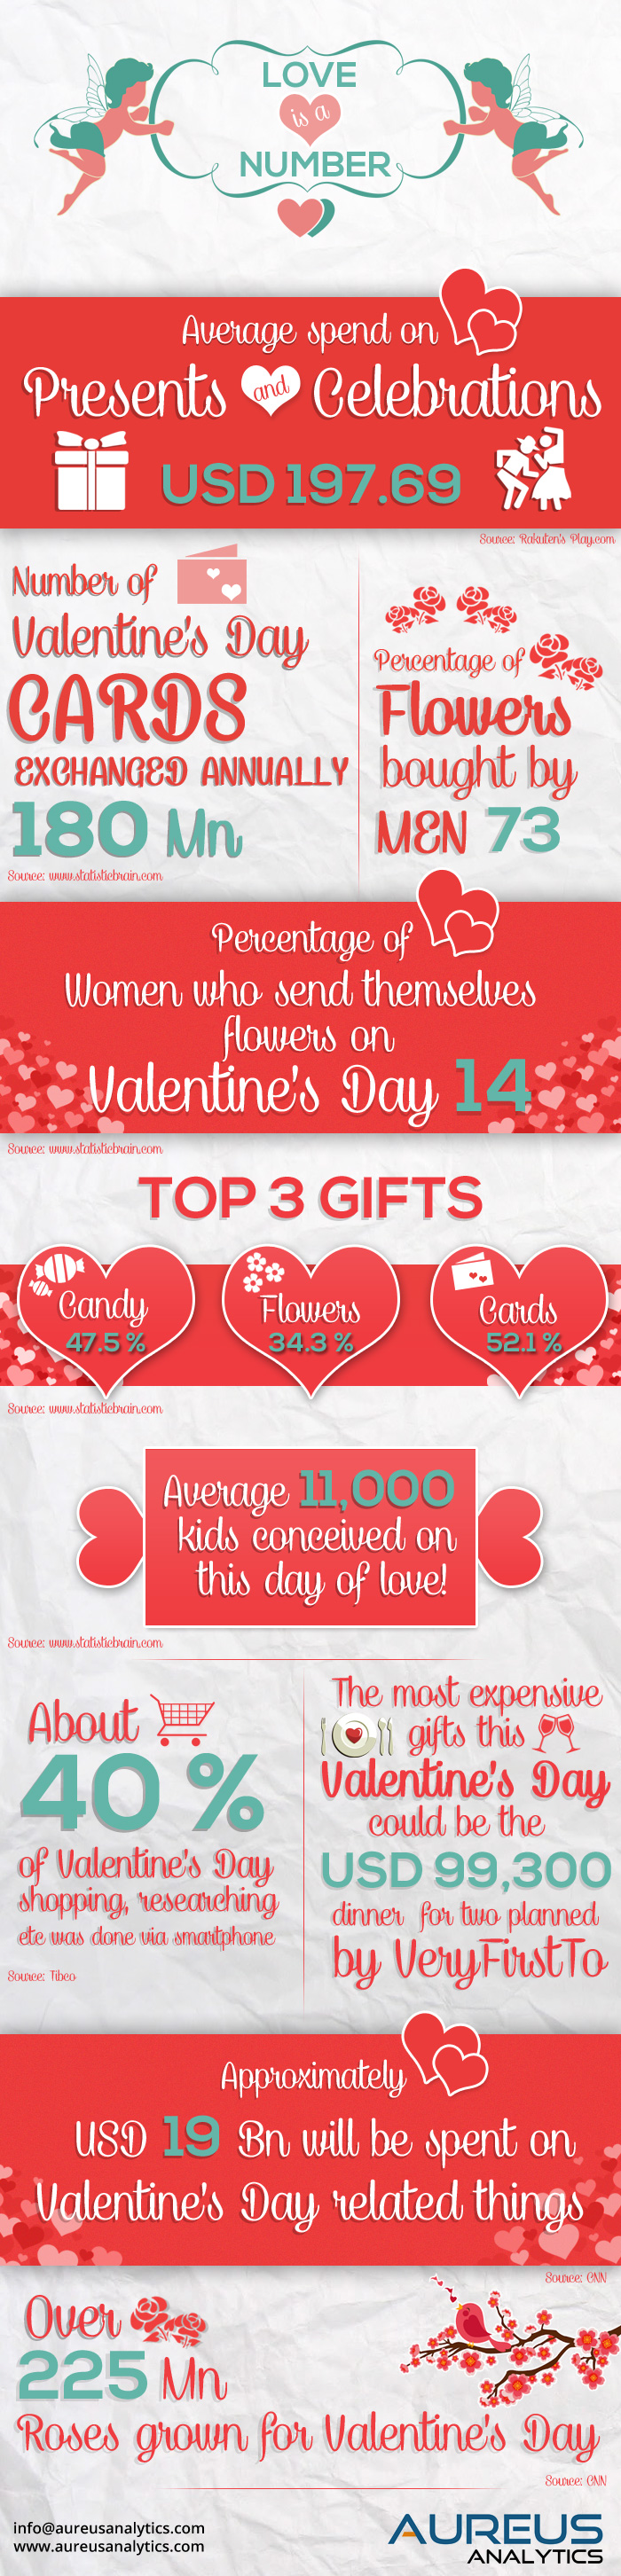 valentines-day-infographic